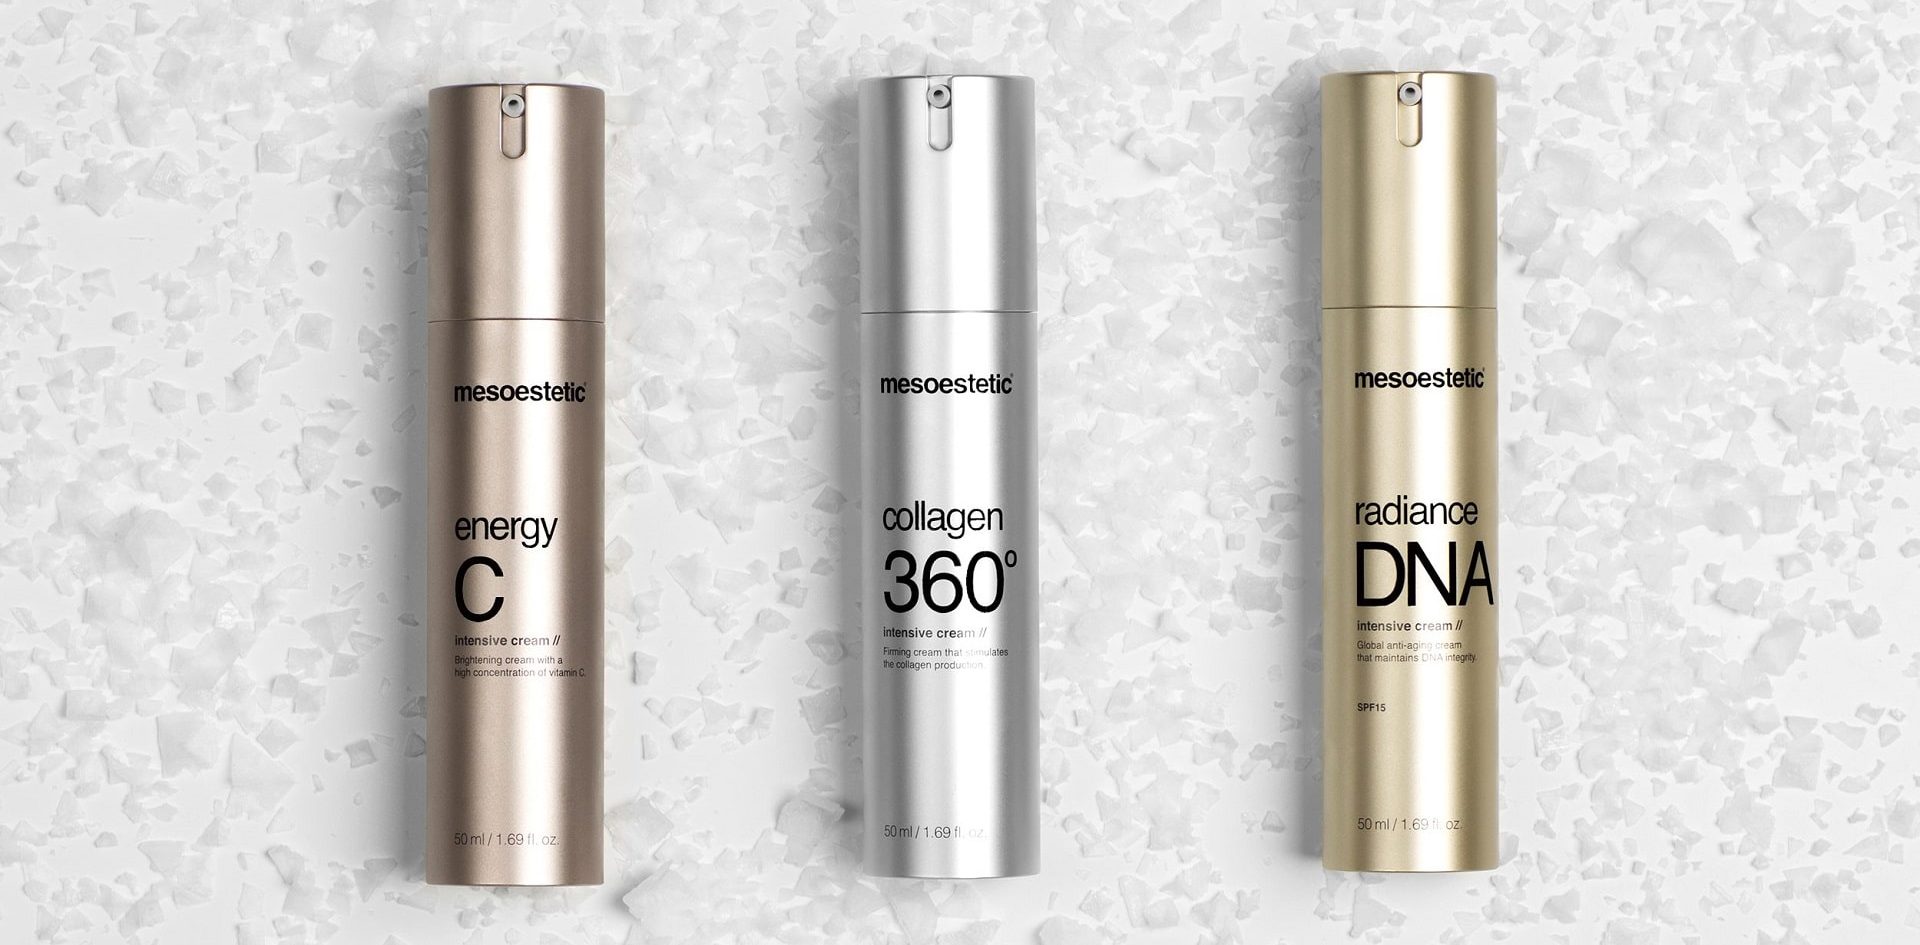 EnergyC Collagen360 RadianceDNA line up V2 e1615432817208 min